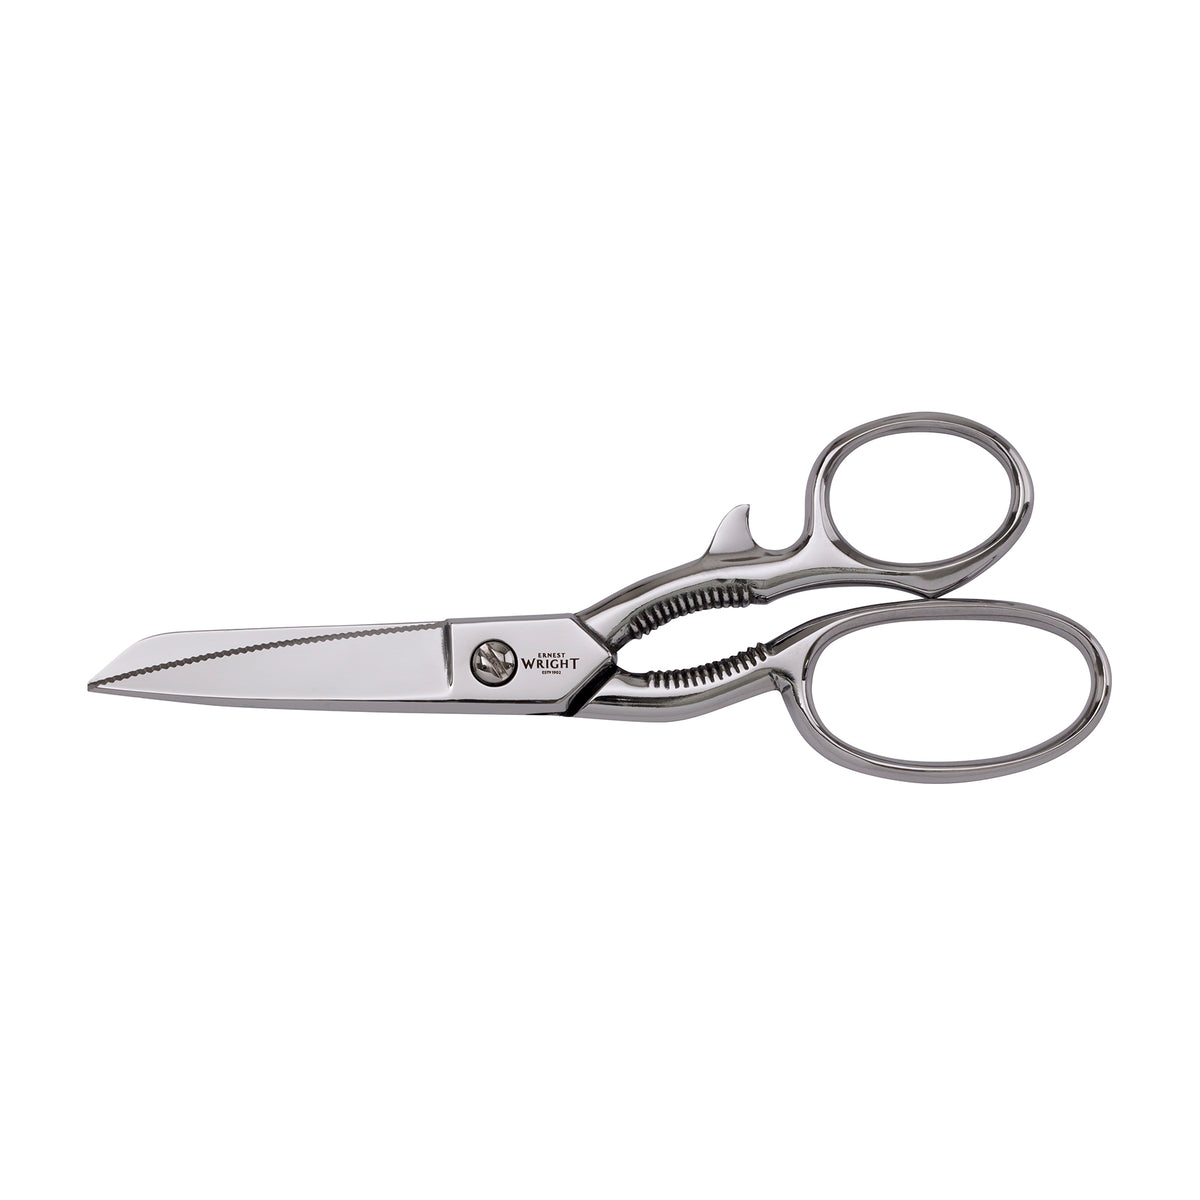 Turton left-handed kitchen scissors